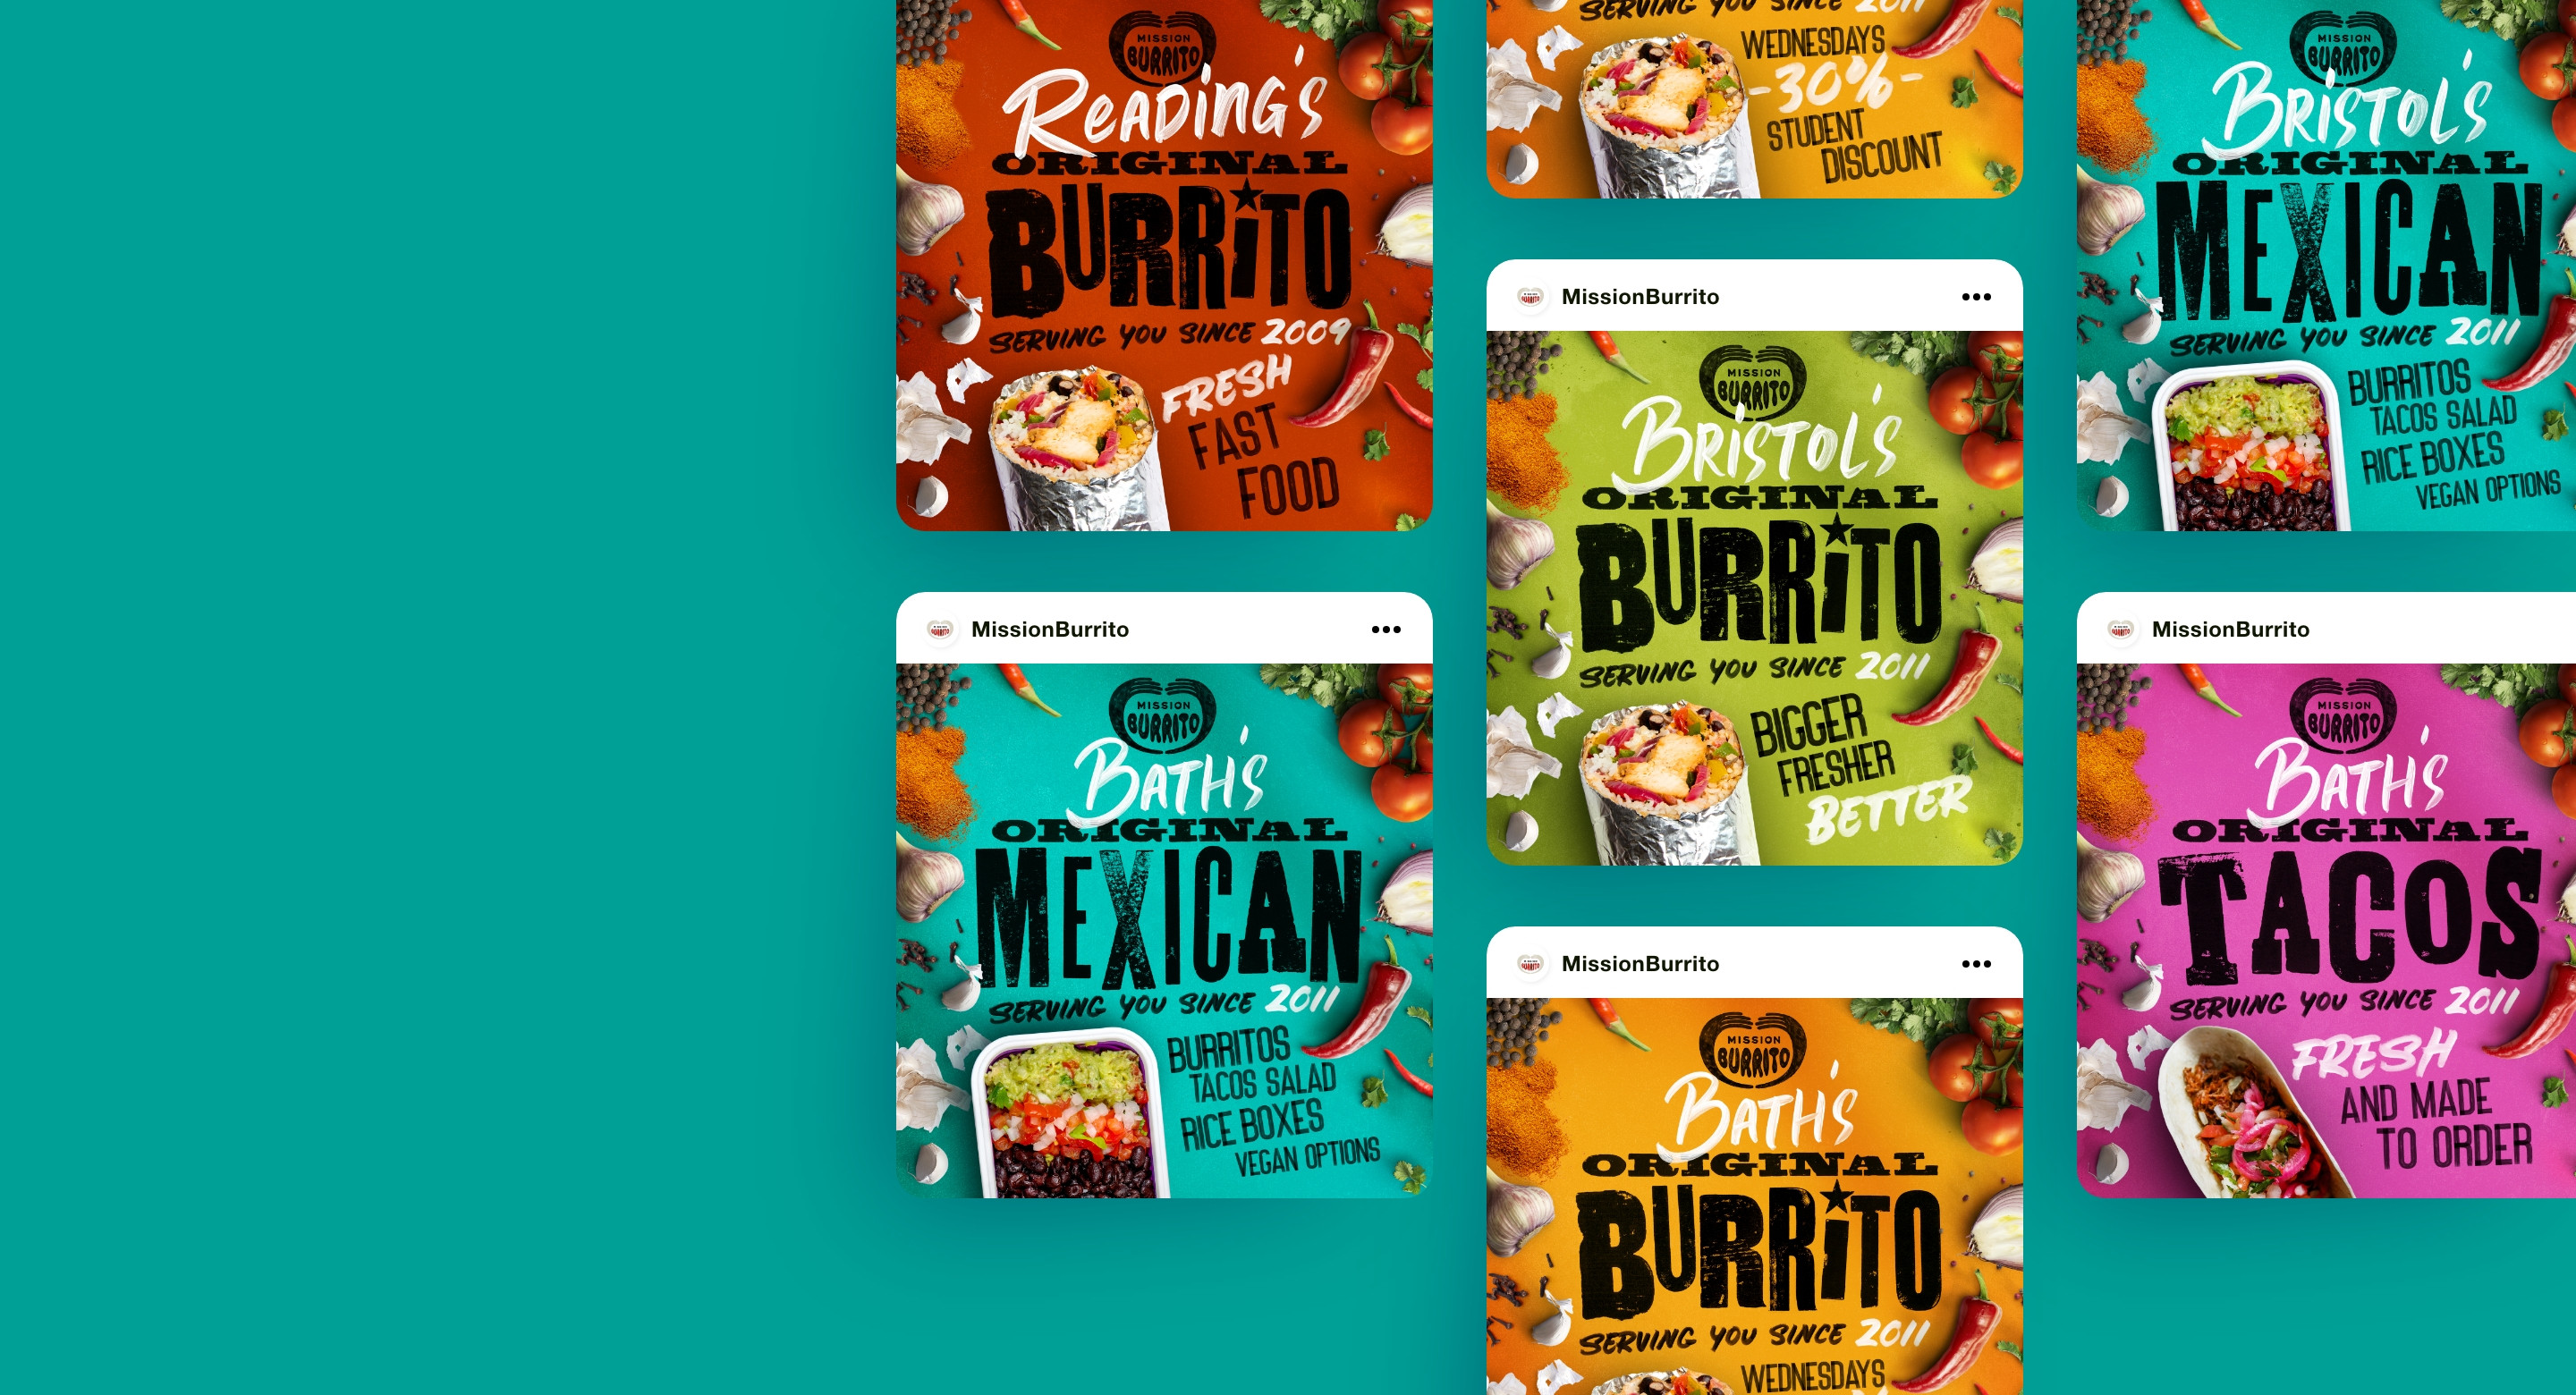 Burrito restaurant social media designs by Root Studio